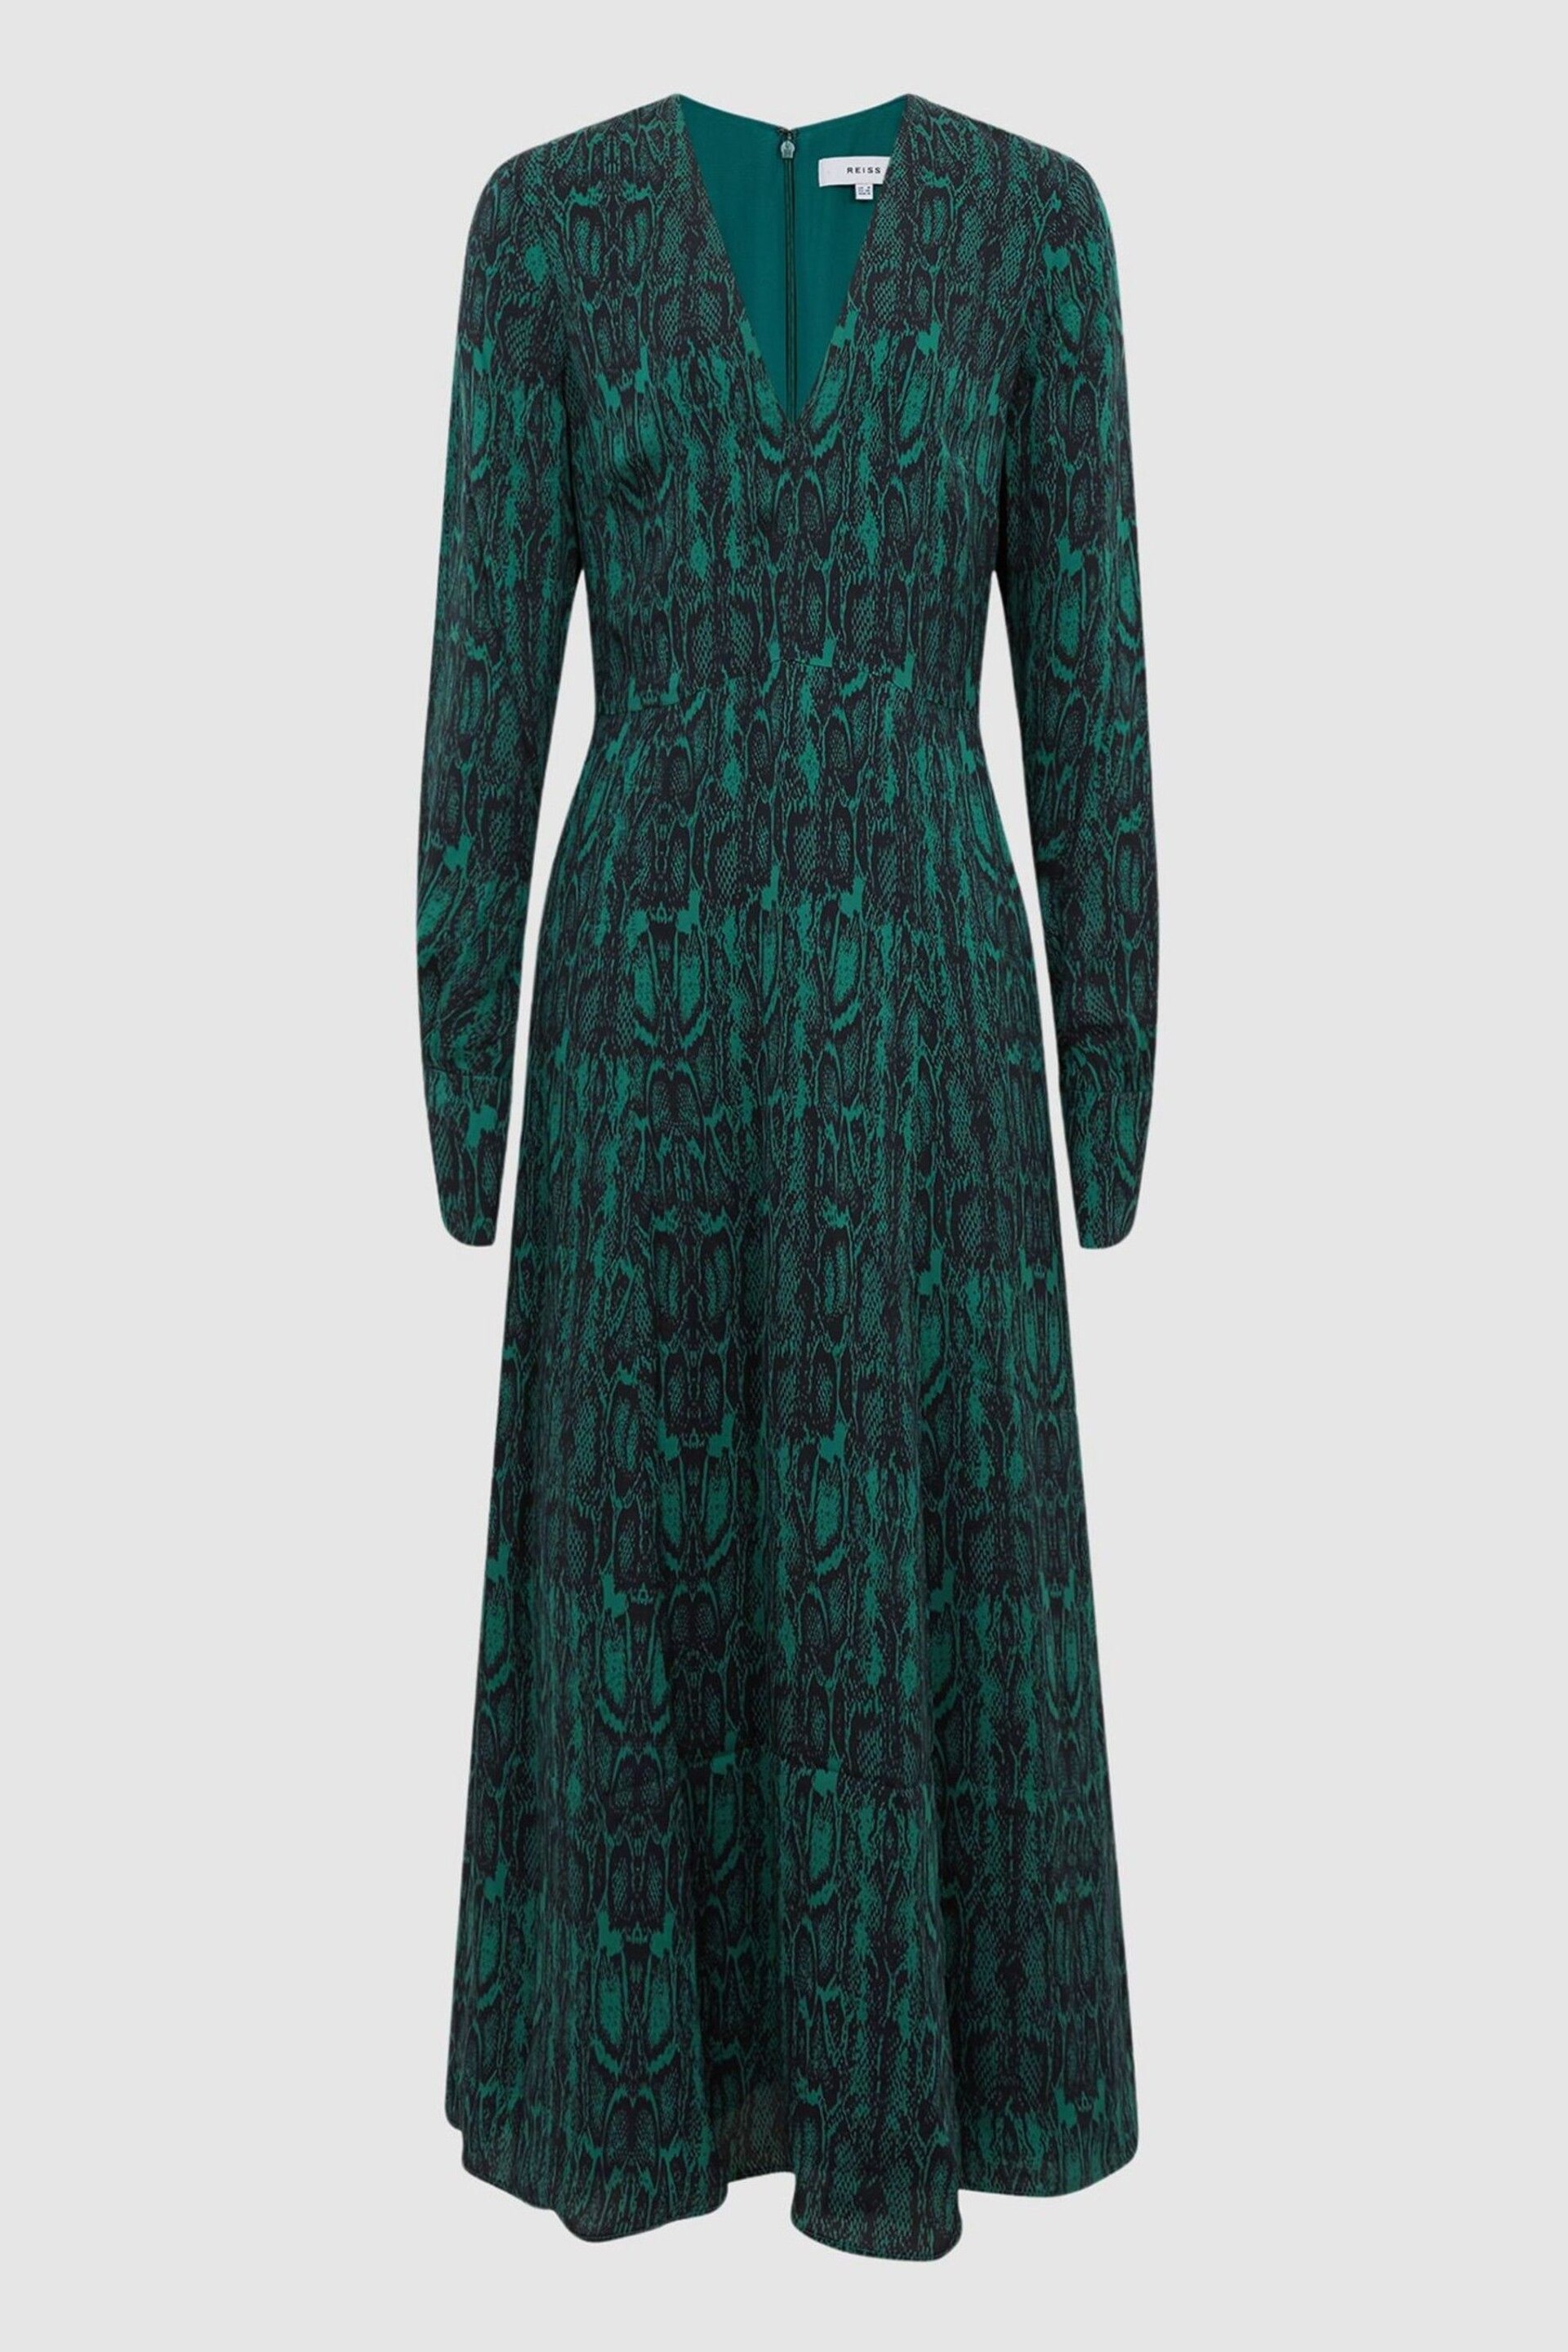 Reiss Teal Greta Long Sleeve Printed Midi Dress - Image 2 of 7